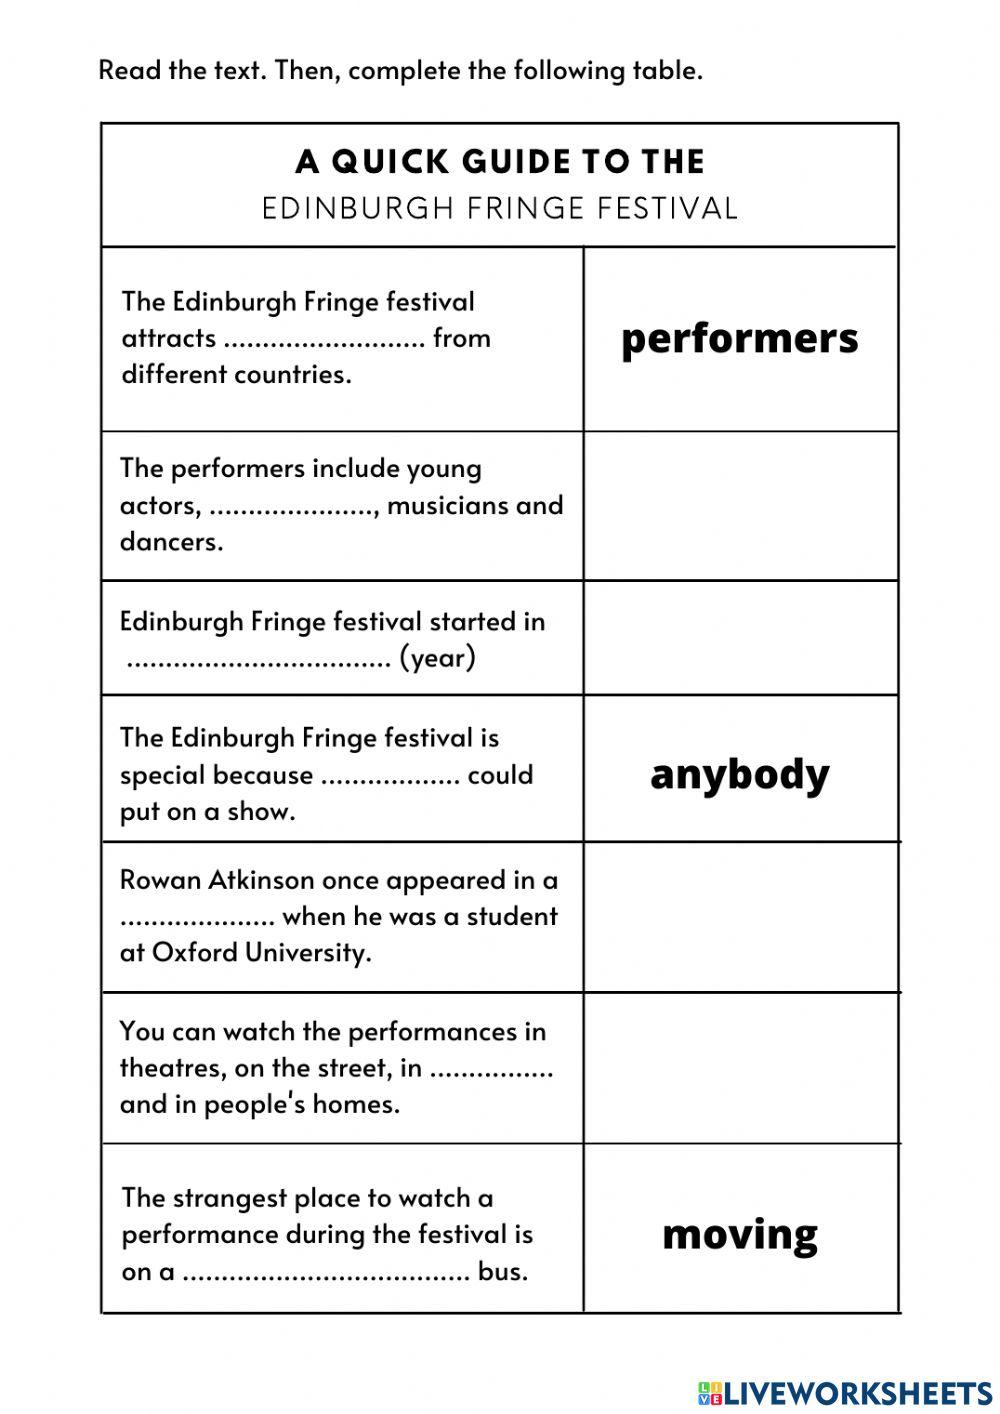 A Quick Guide to the Edinburgh Fringe Festival - Pulse 2